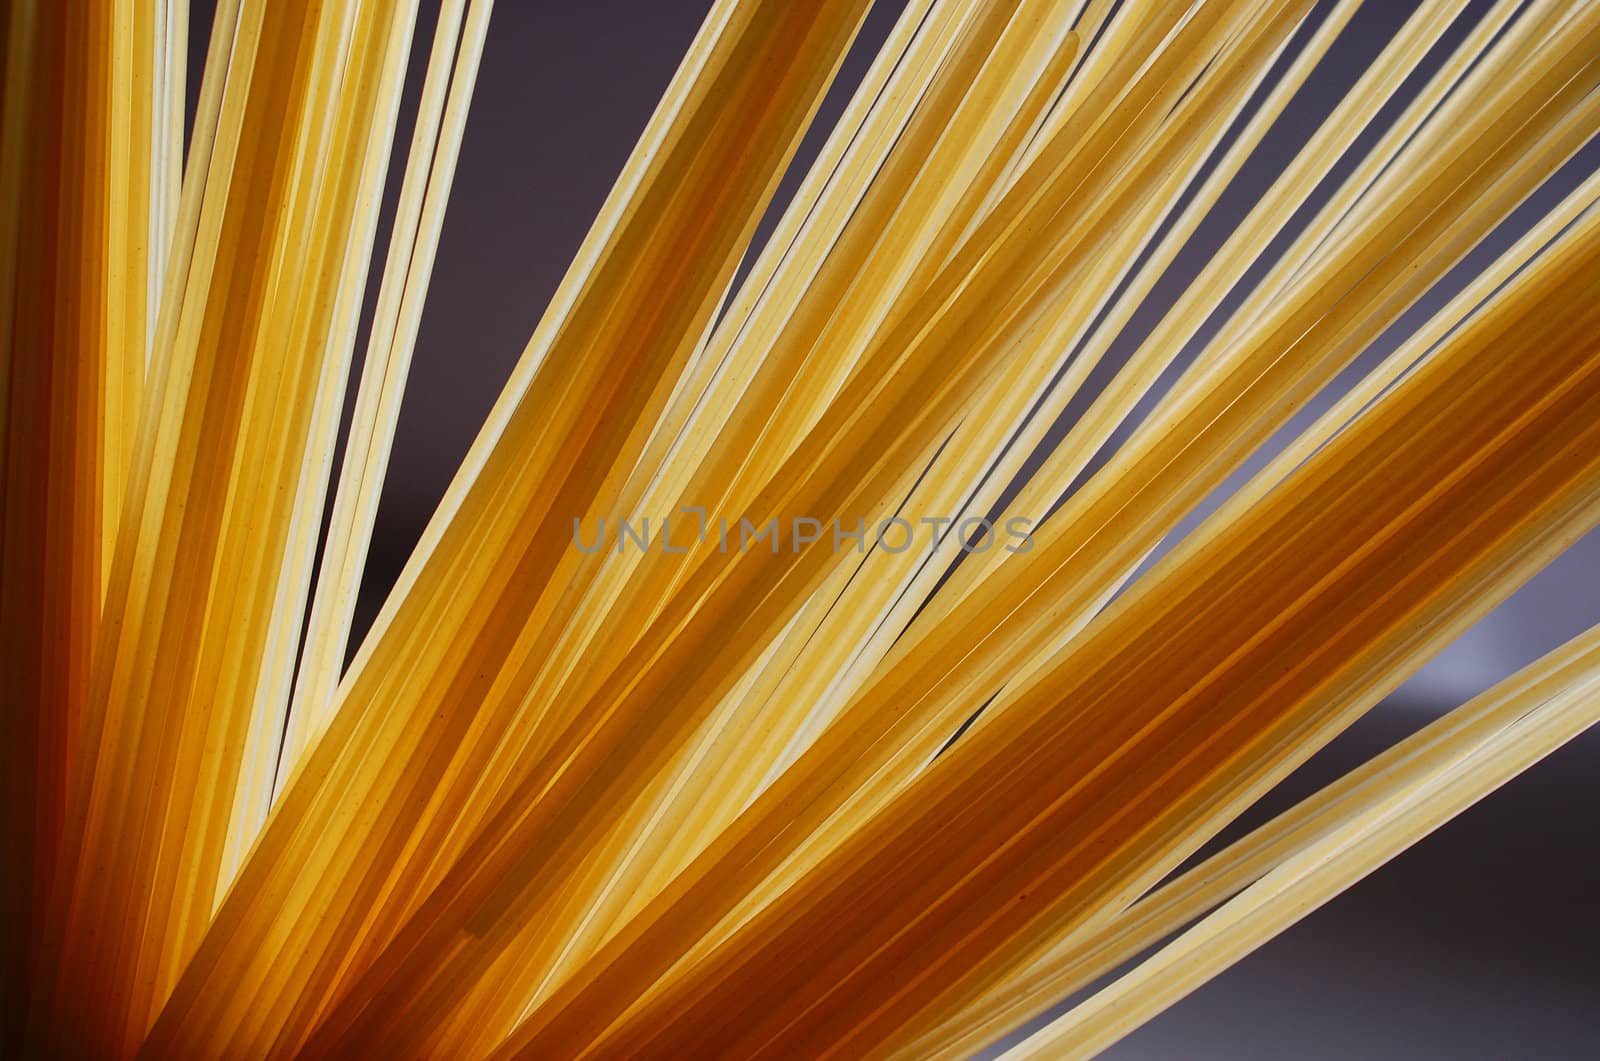 spaghetti pasta arranged as a fan on a dark background